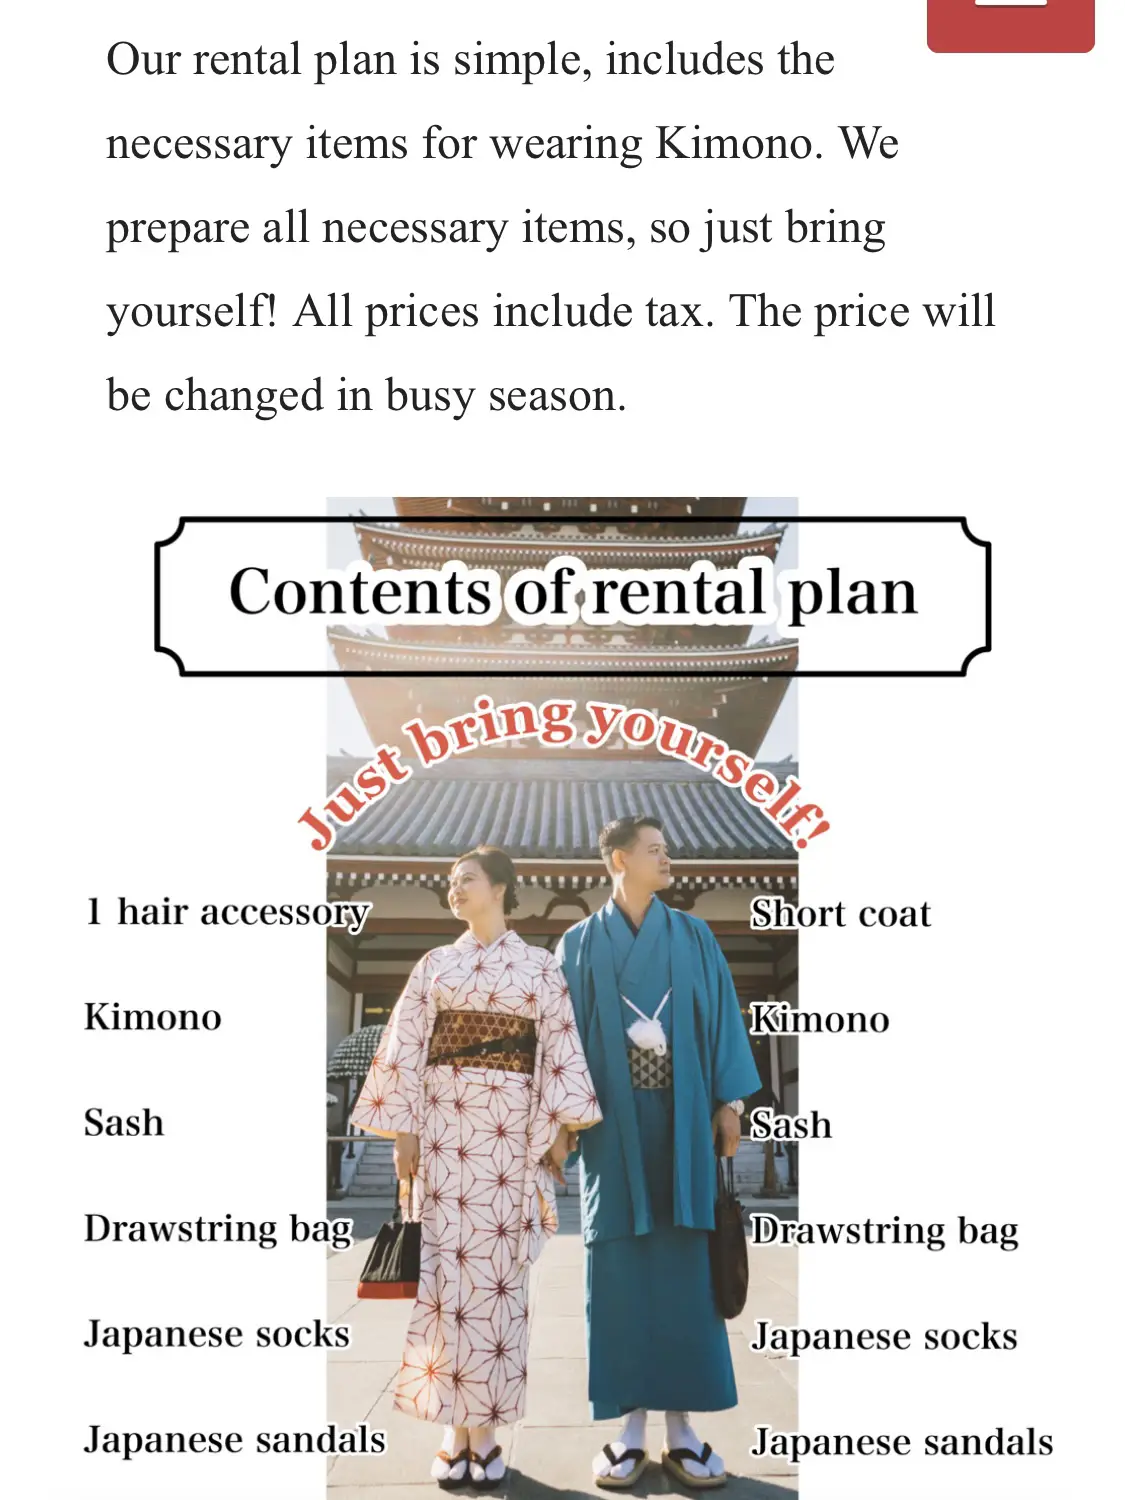 Kyoto Japan Guide: Wearing A Kimono in Winter? 🥶❄️